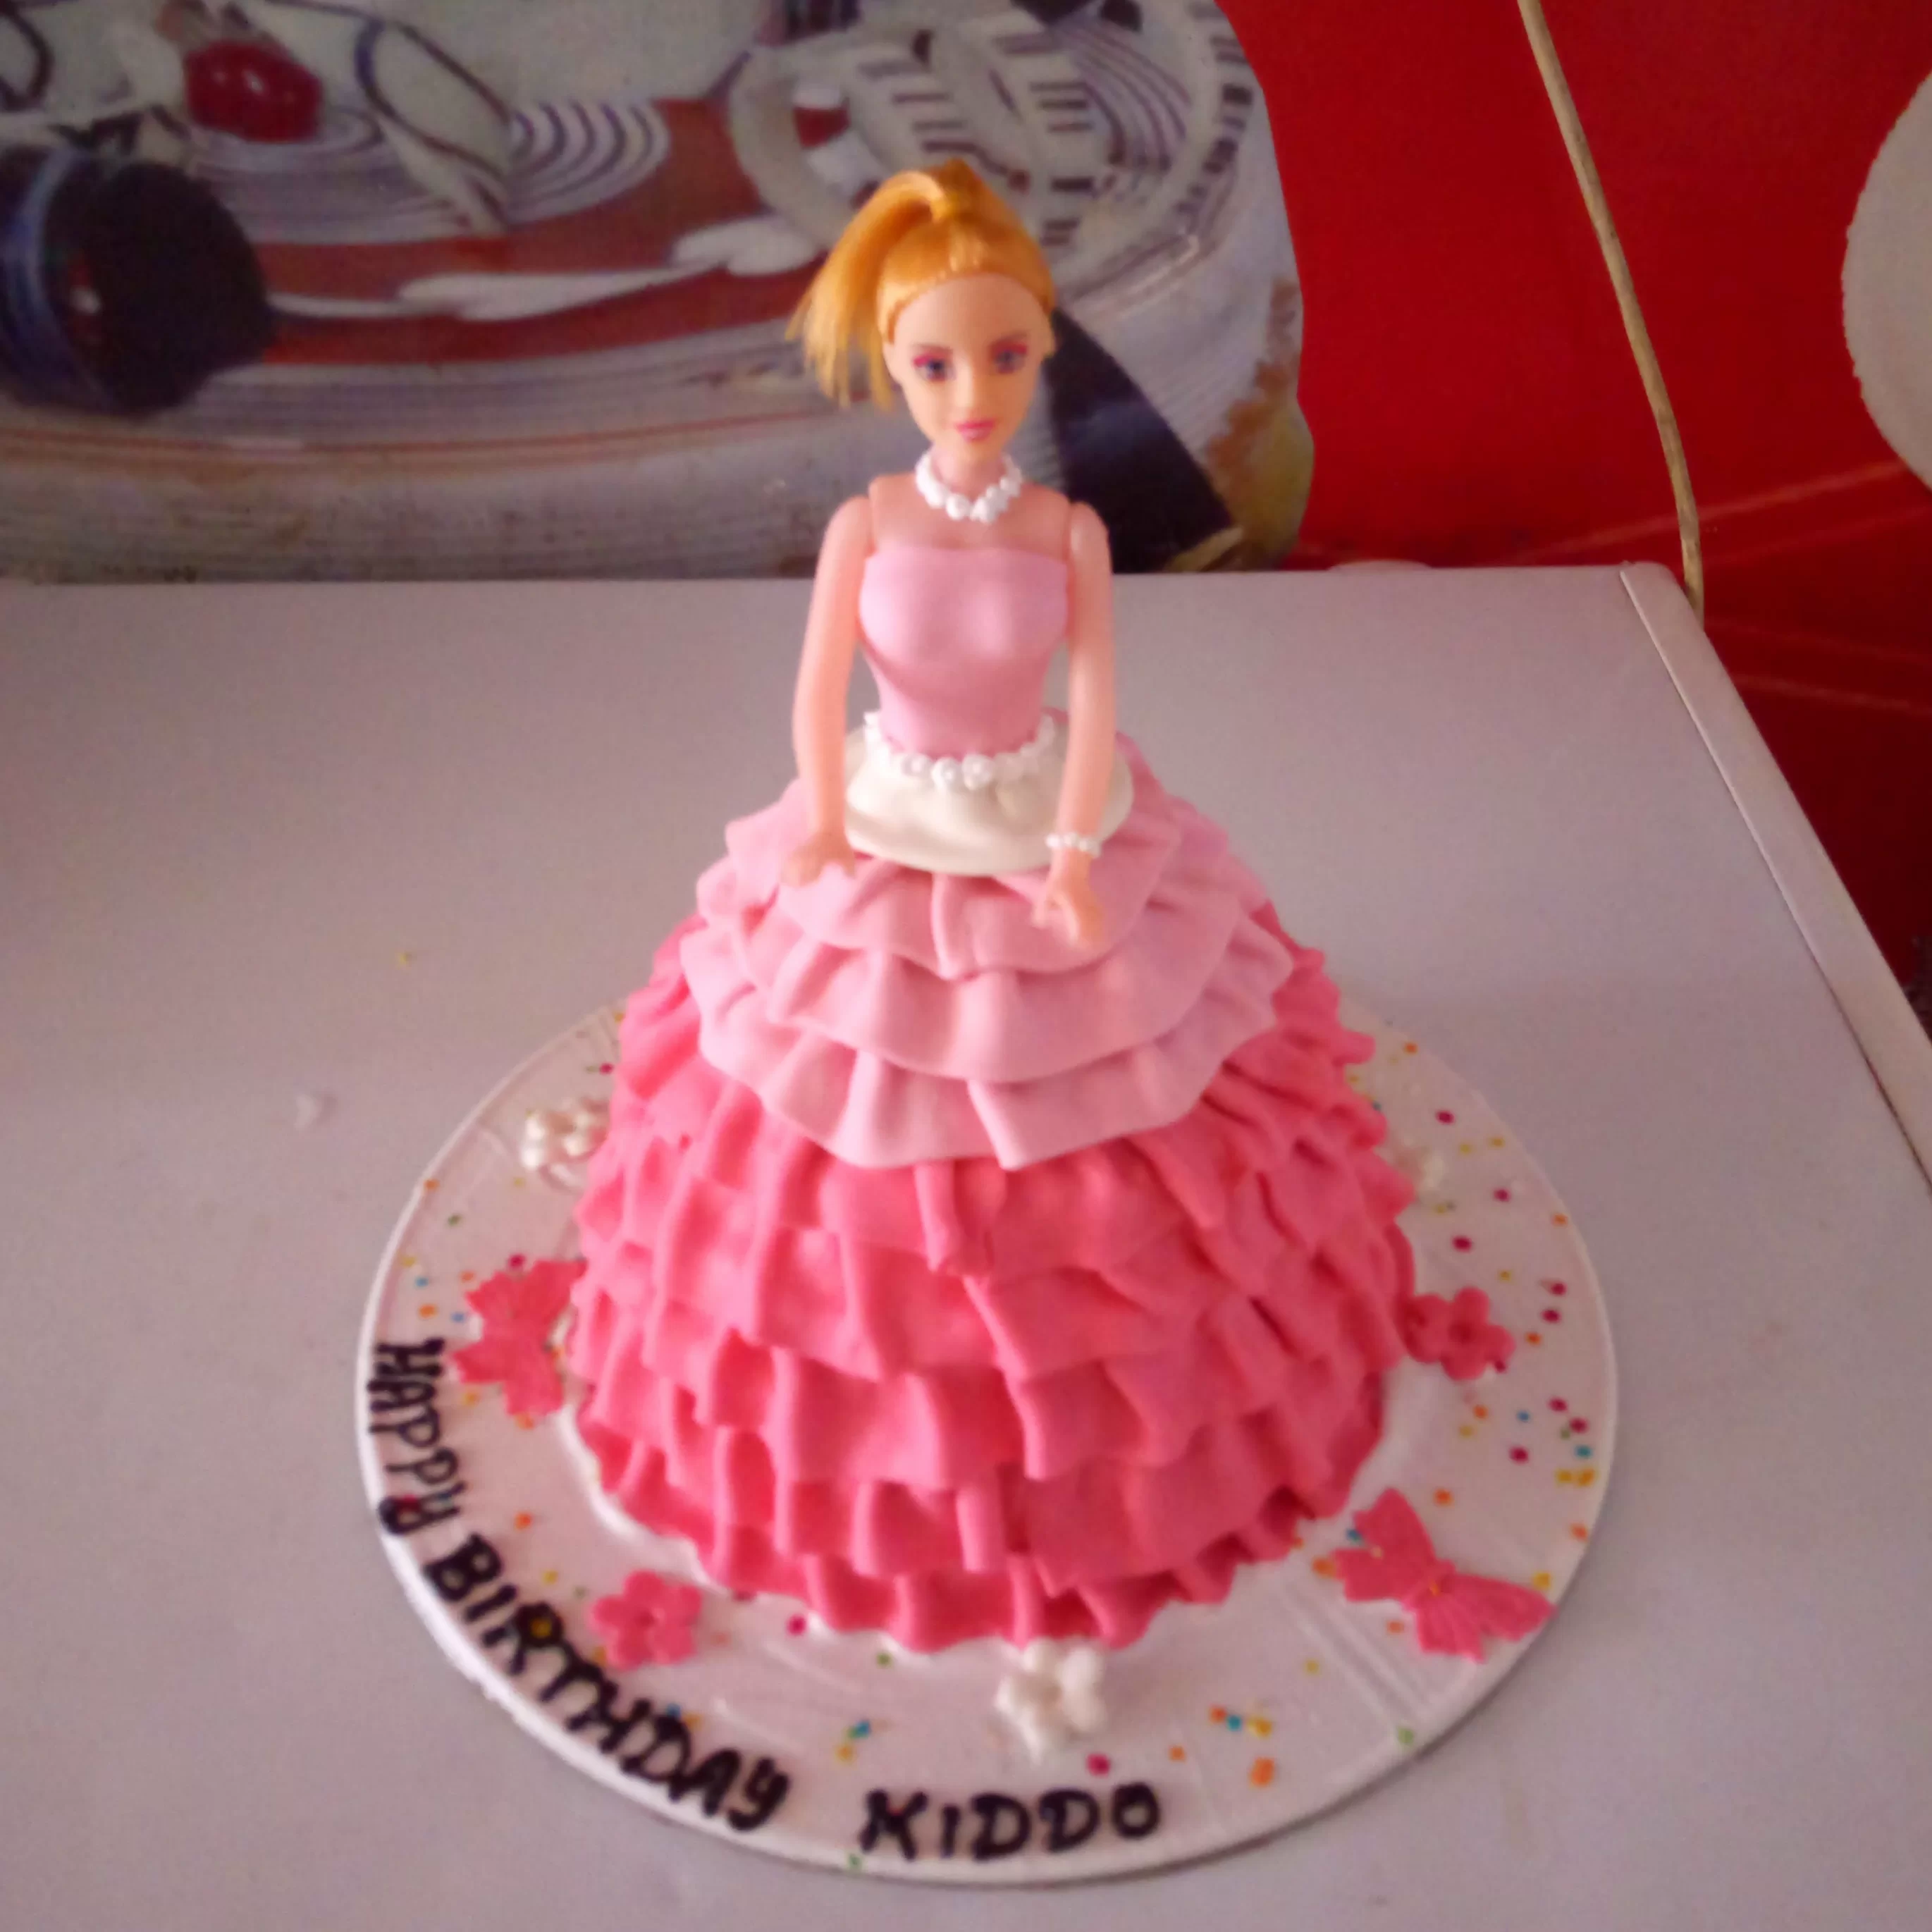 Princess doll cake 👸 - The Custom Cake Factory | Facebook